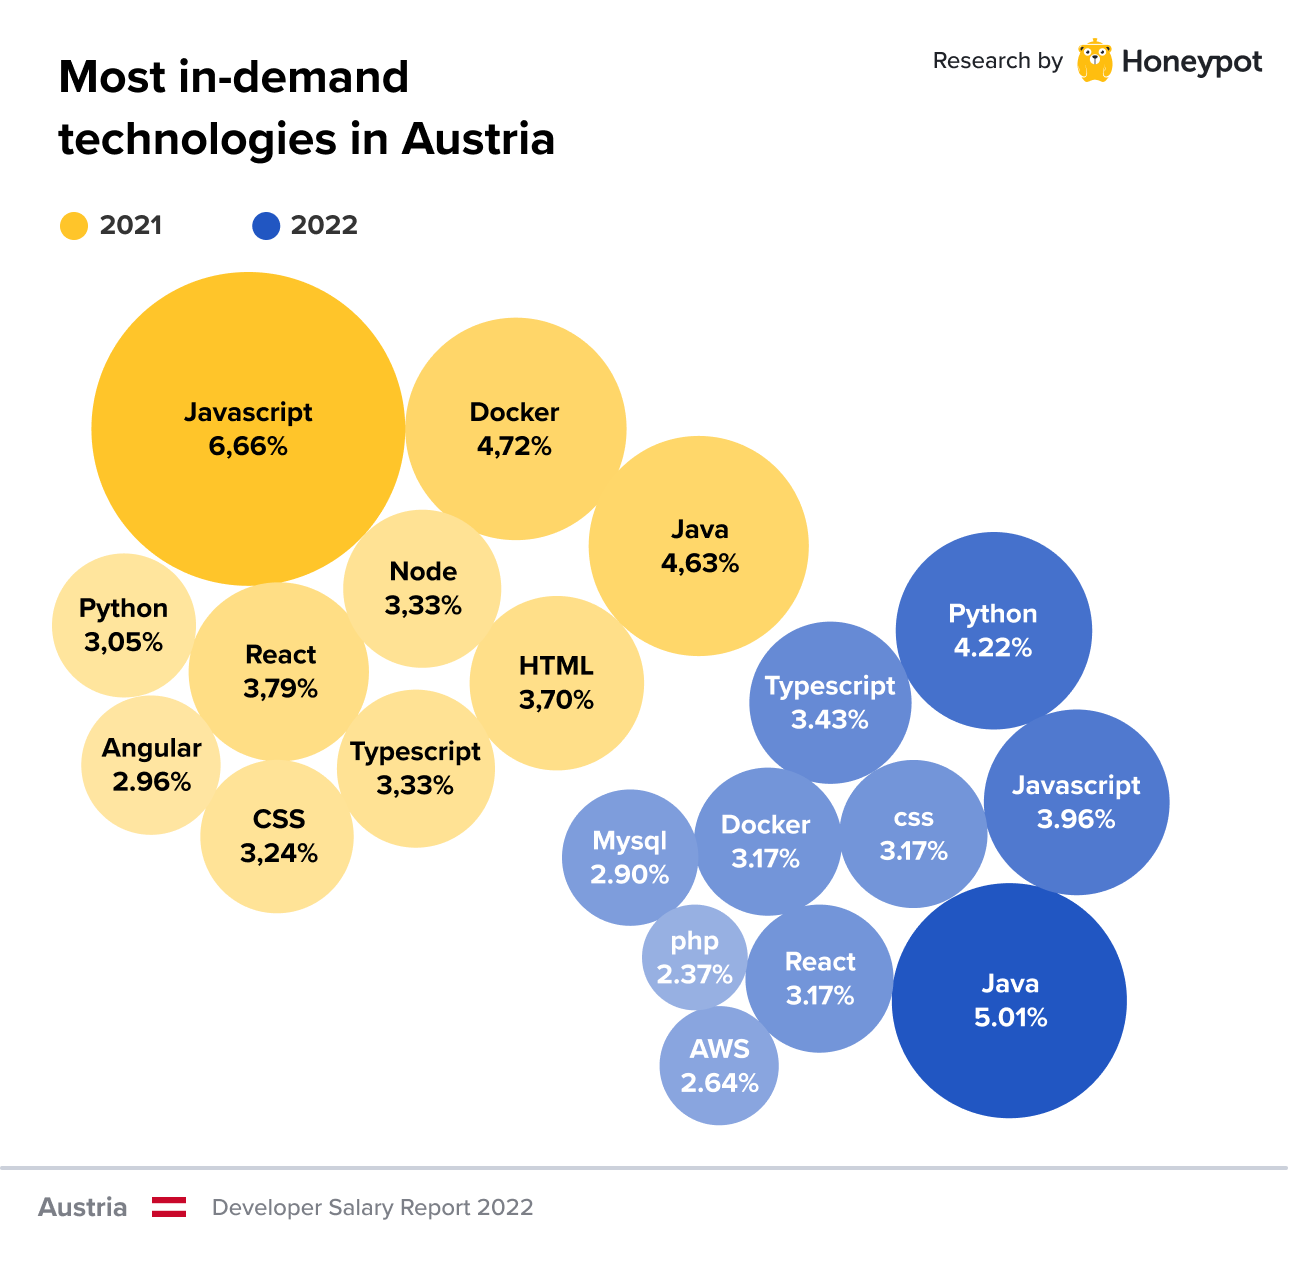 Most in-demand technologies in Austria